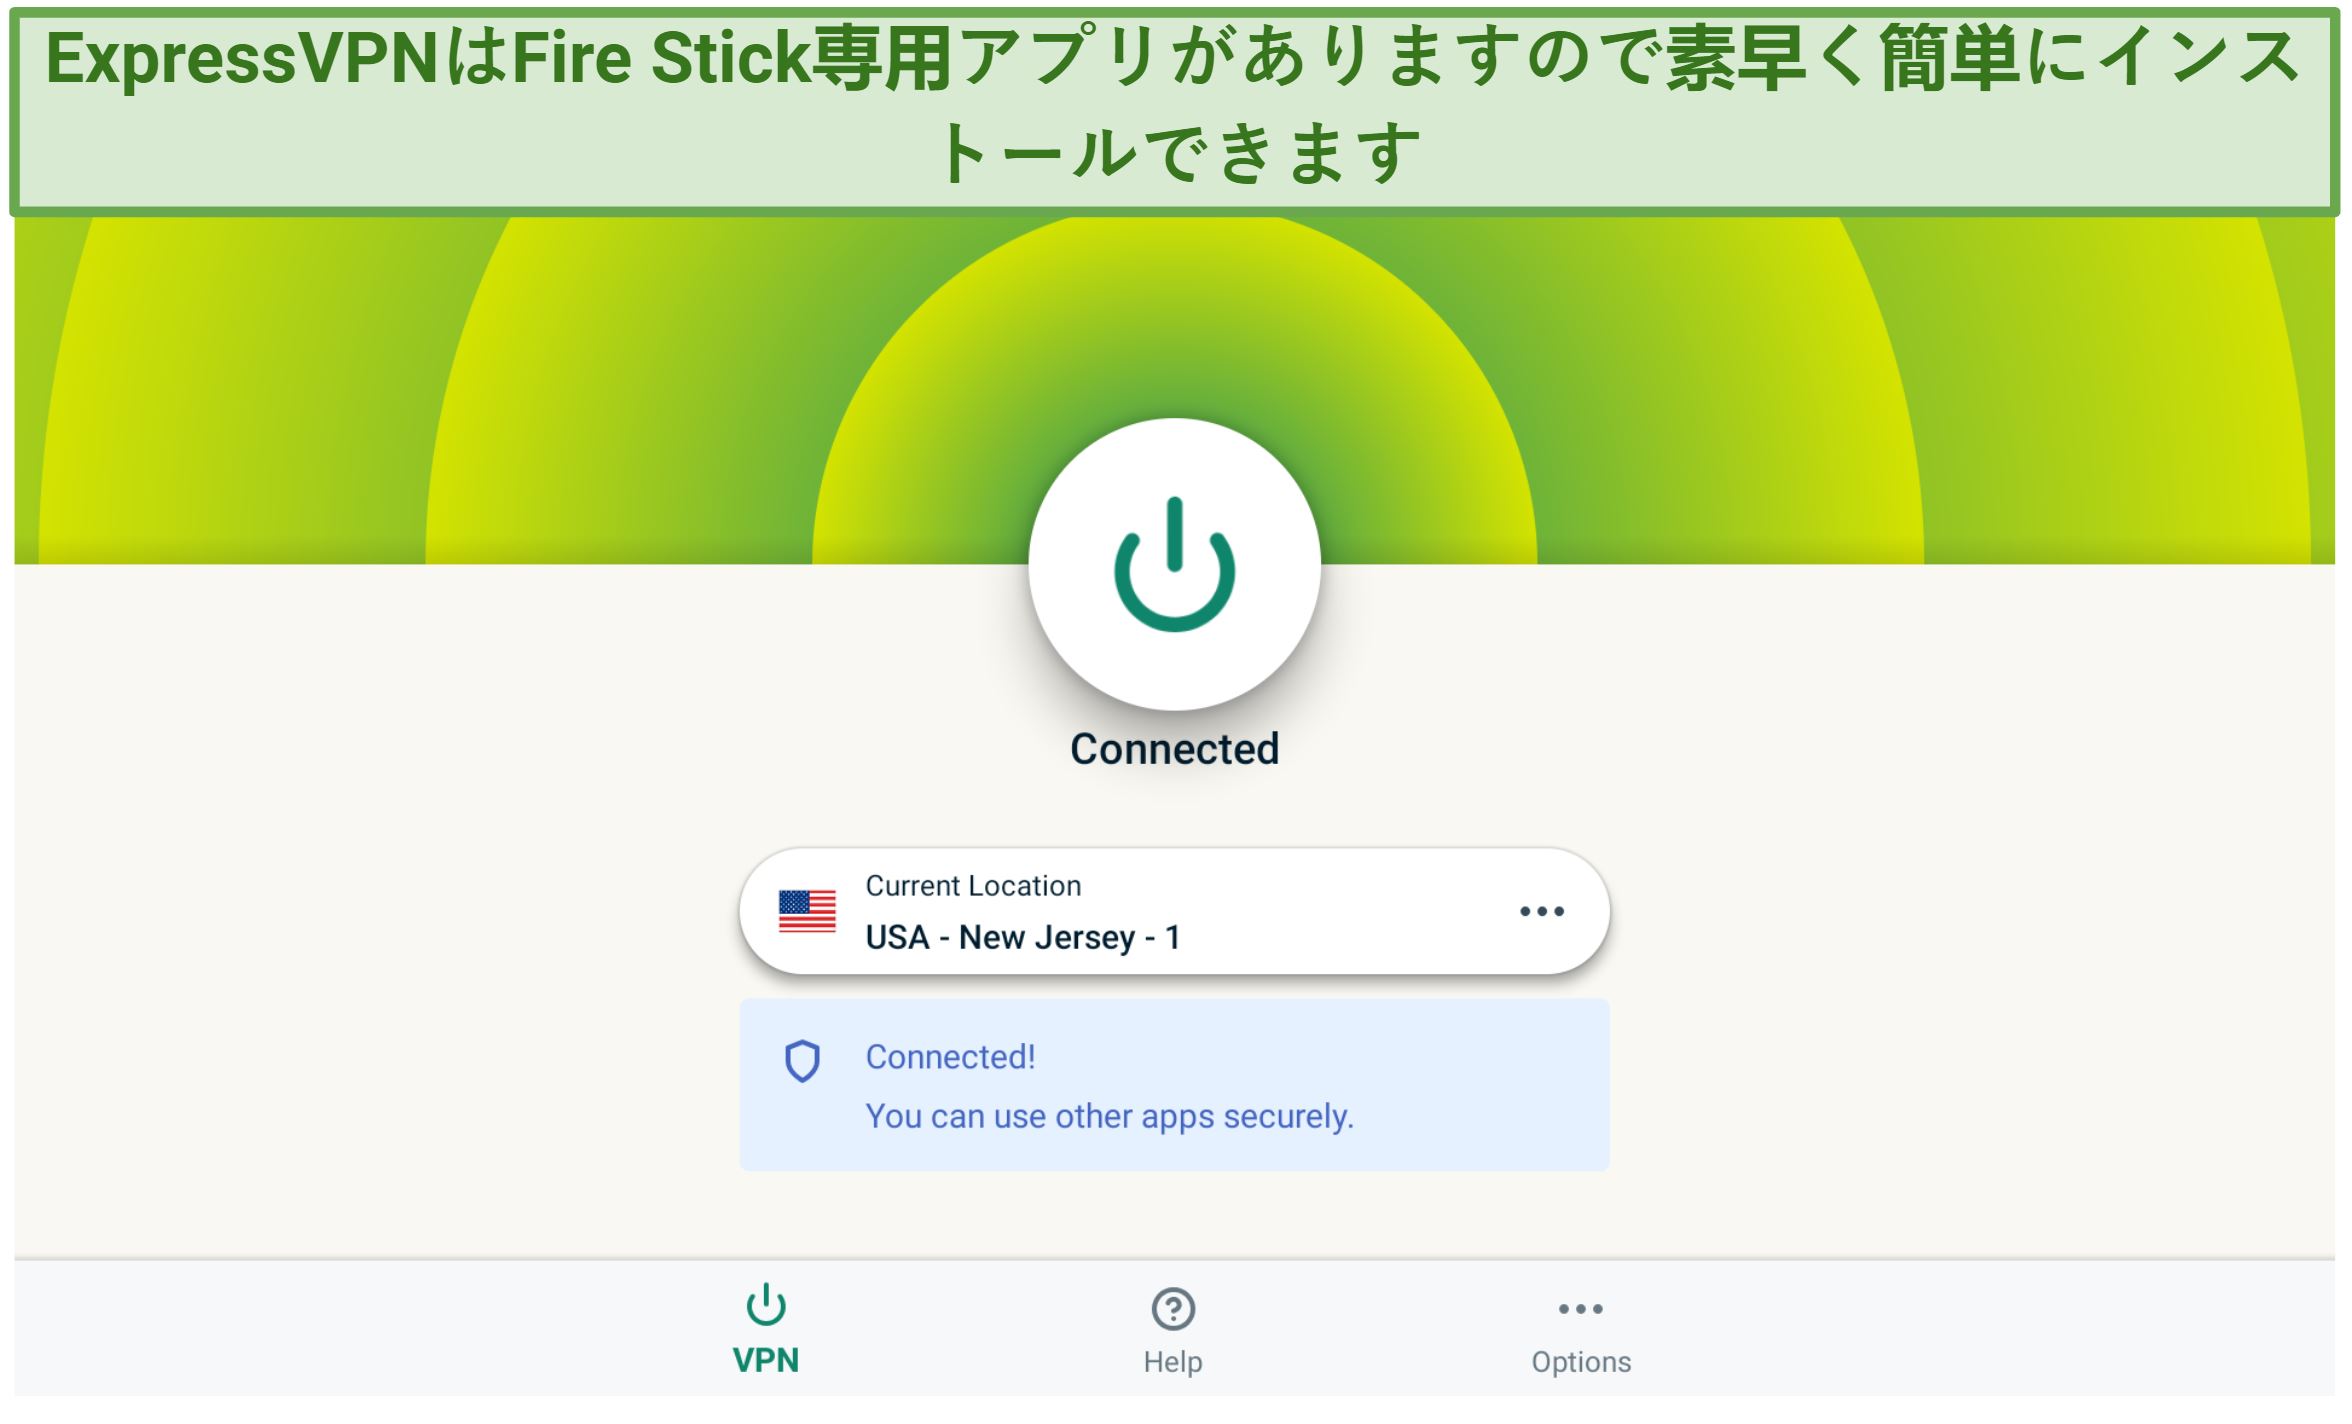 Screenshot showing the ExpressVPN home screen on the native Fire app